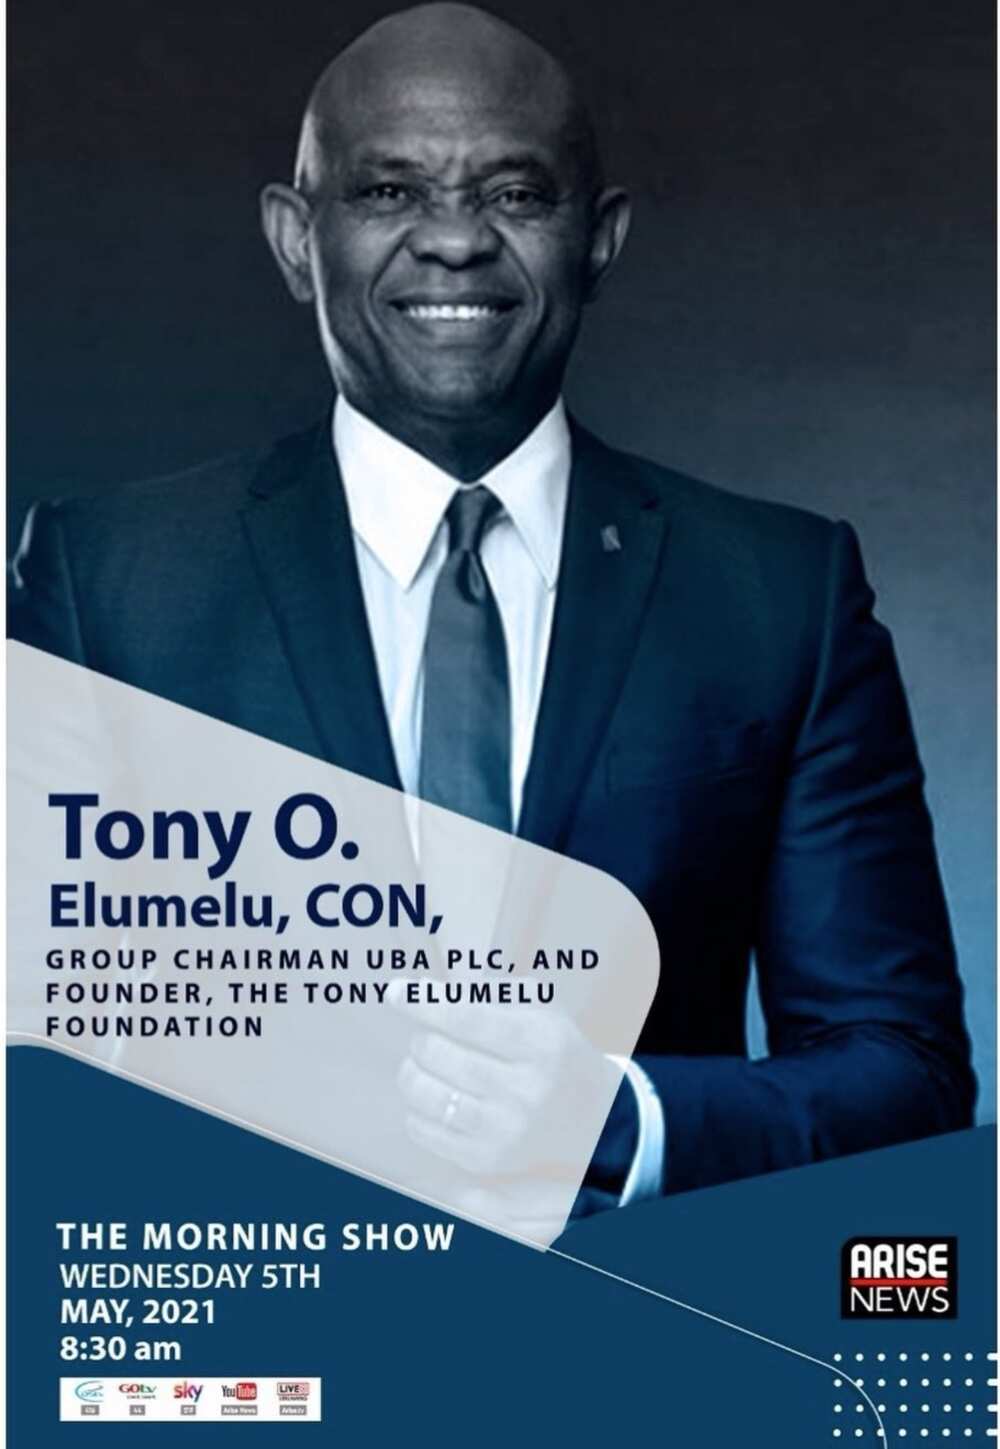 ARISE News to Interview Tony Elumelu, to Speak on Politics, Economy, African Development, Entrepreneurship